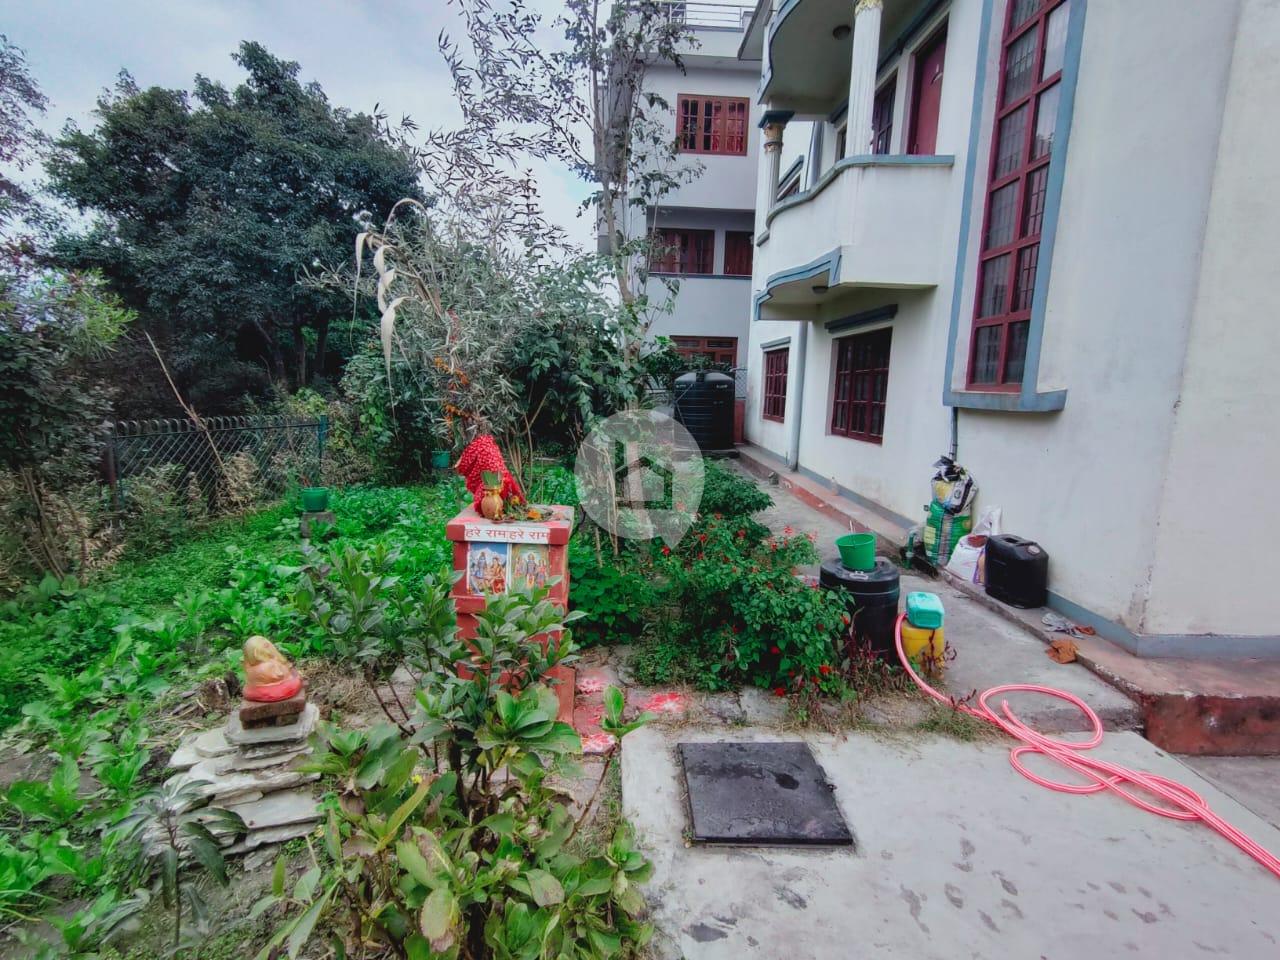 House for sale : House for Sale in Dhapasi, Kathmandu Image 7